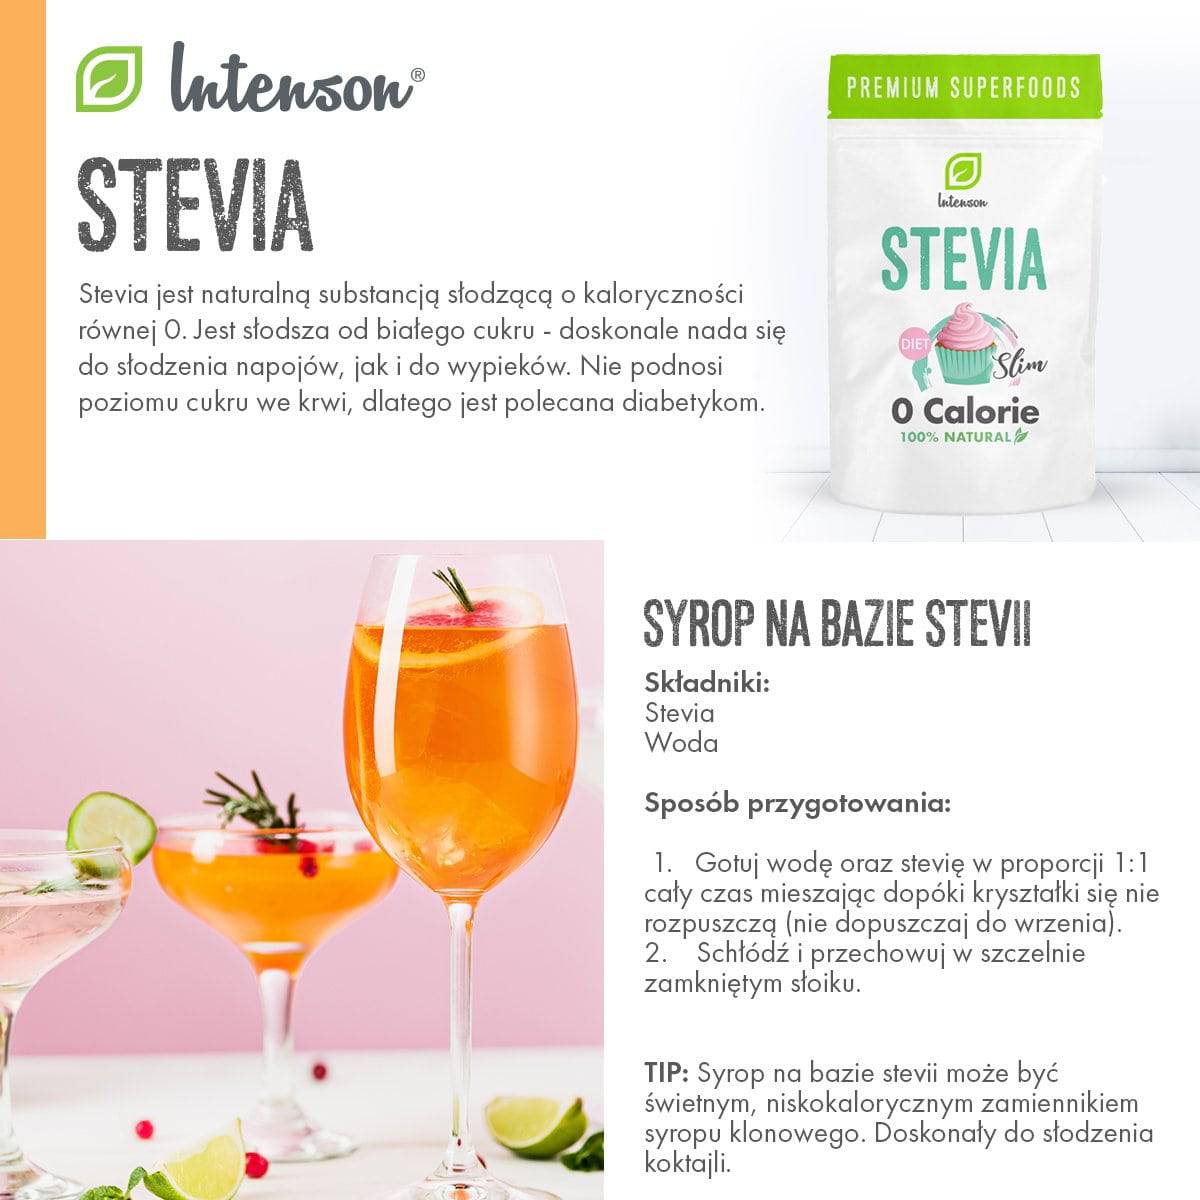 Stevia w kryształkach 1kg (250g x 4) - 0 kcal - Intenson.pl